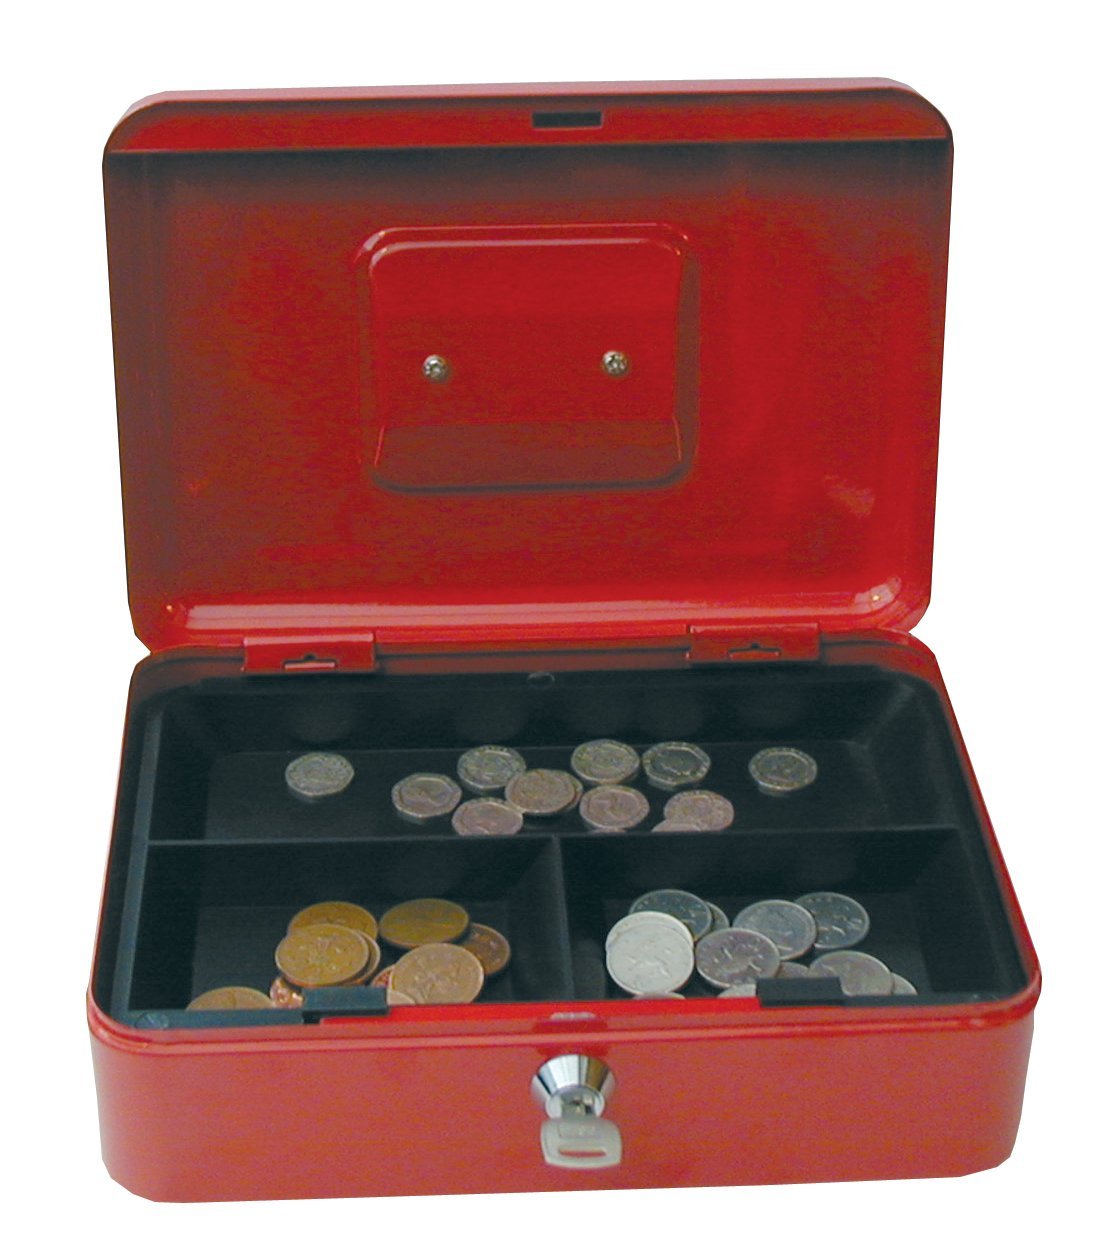 ValueX Metal Cash Box 250mm (10 Inch) Key Lock Red